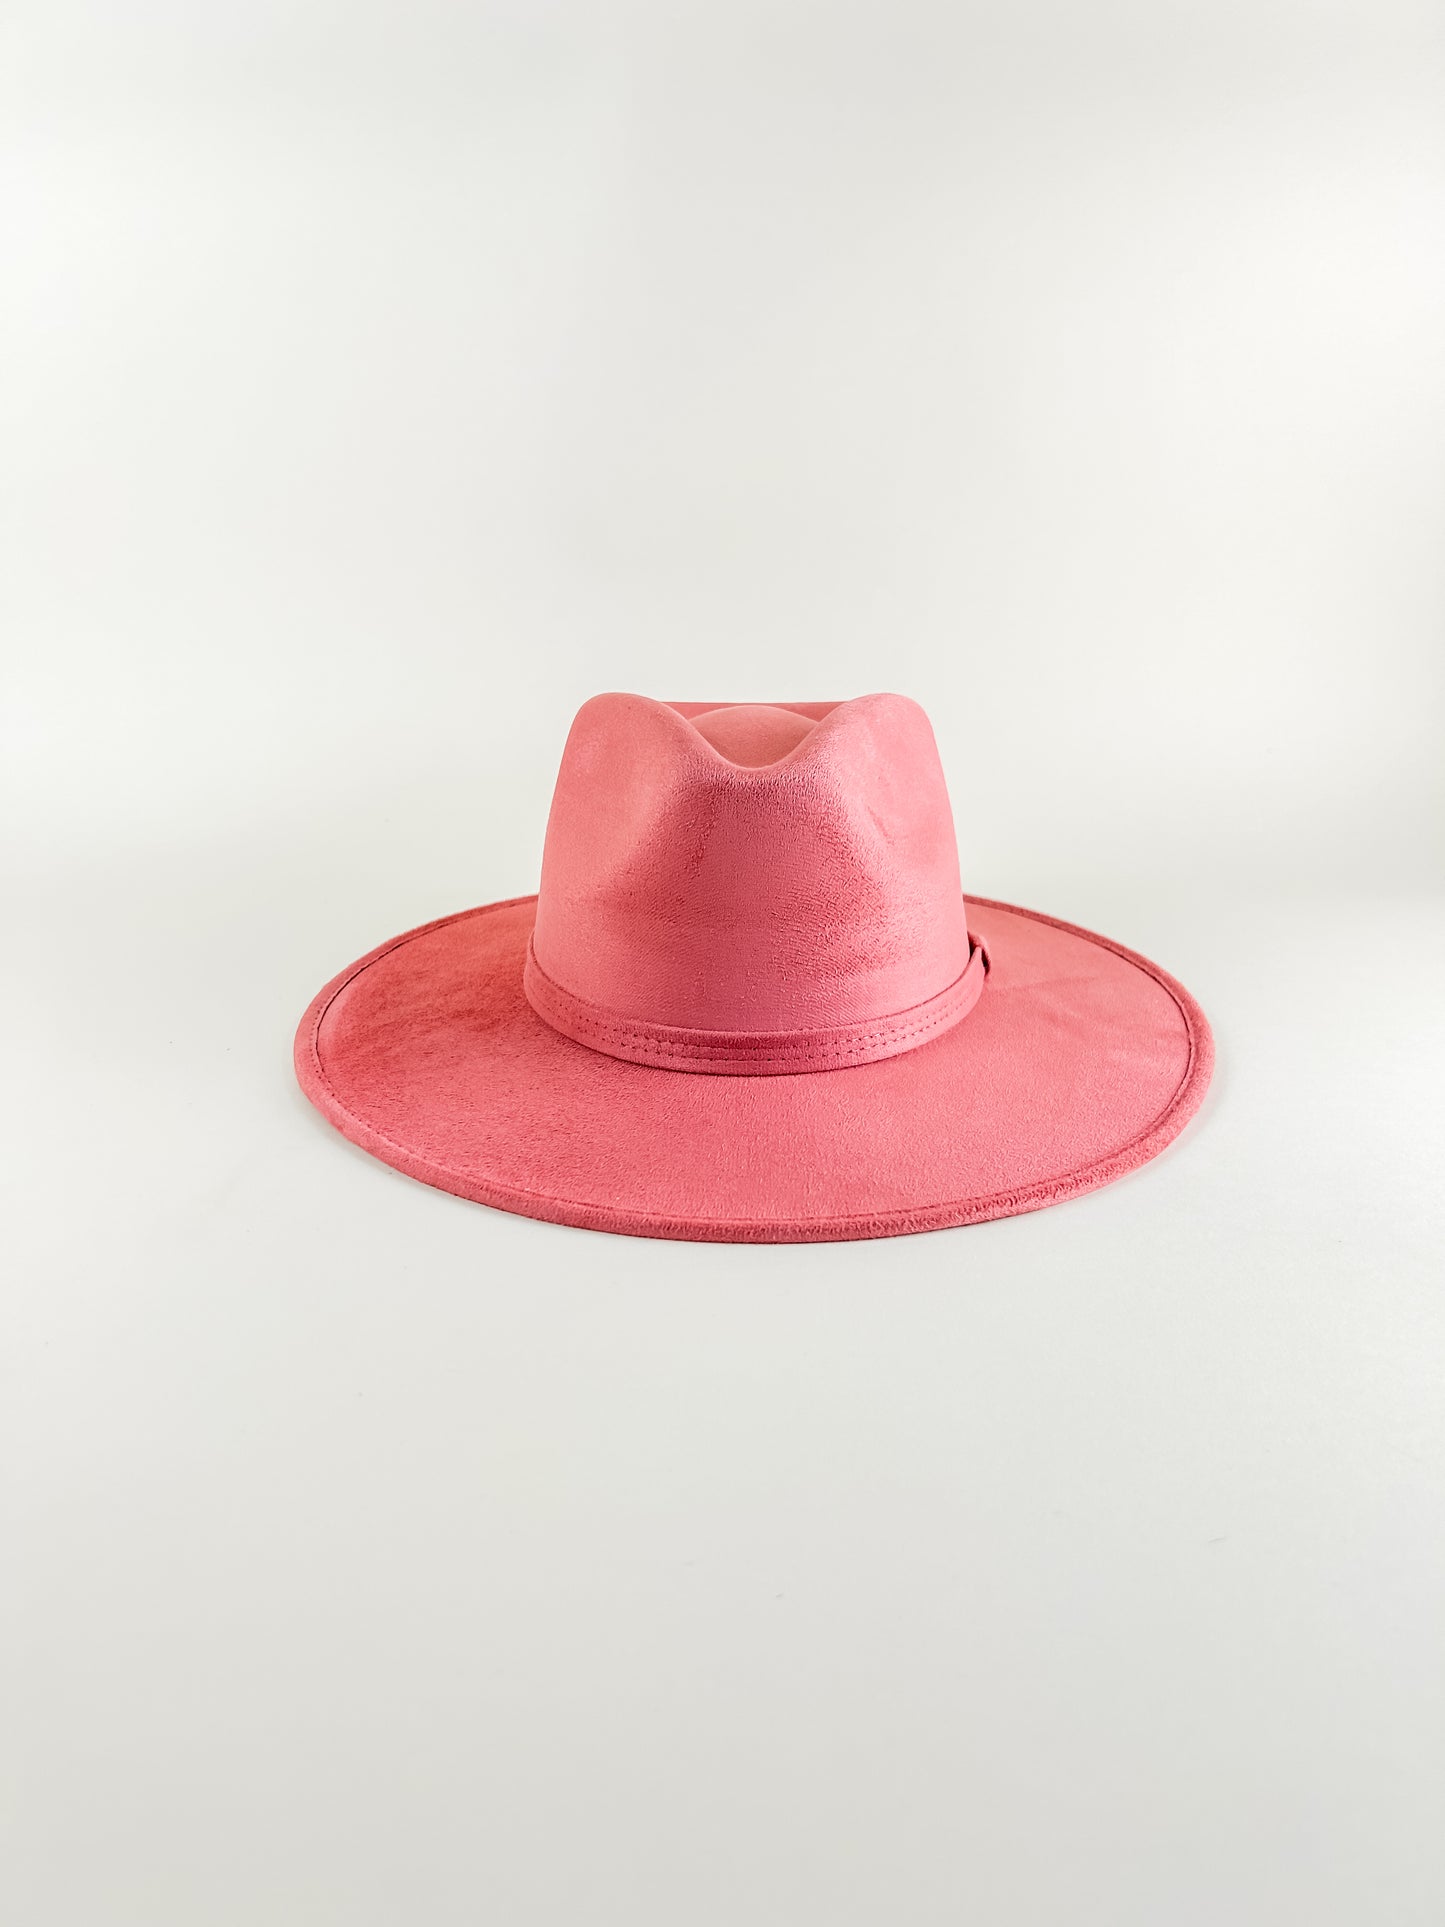 Vegan Suede Rancher Hat - Coral Pink